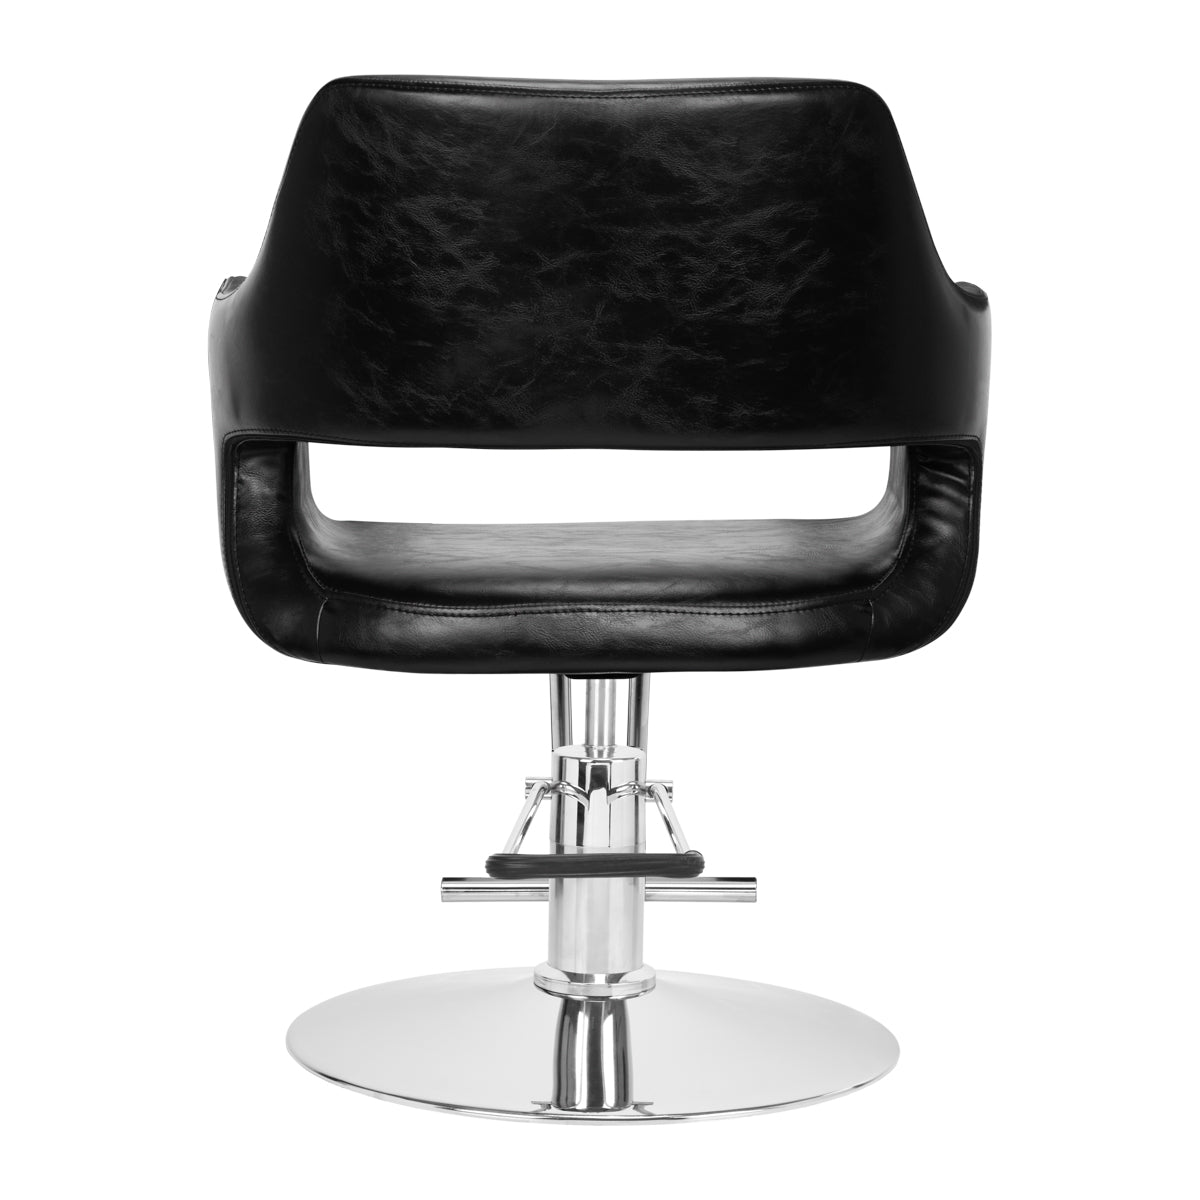 Hair system black hairdressing chair sm339